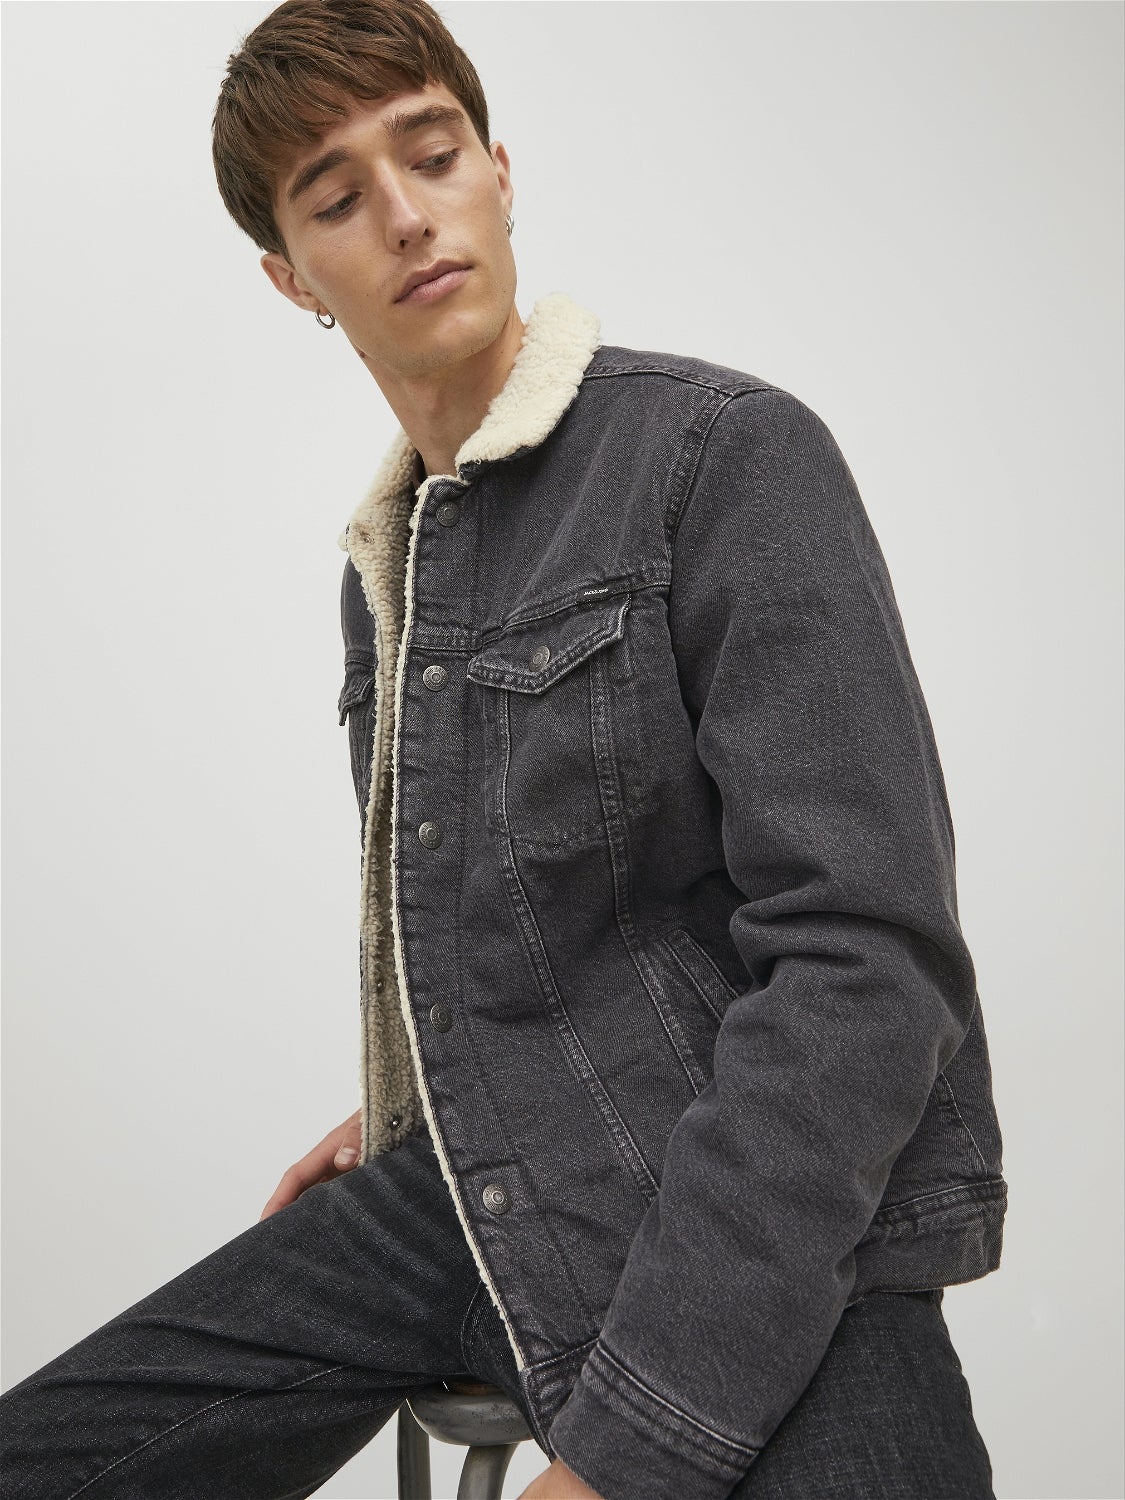 Boys Coats & Jackets in Denim, Leather and More | JACK & JONES JUNIOR